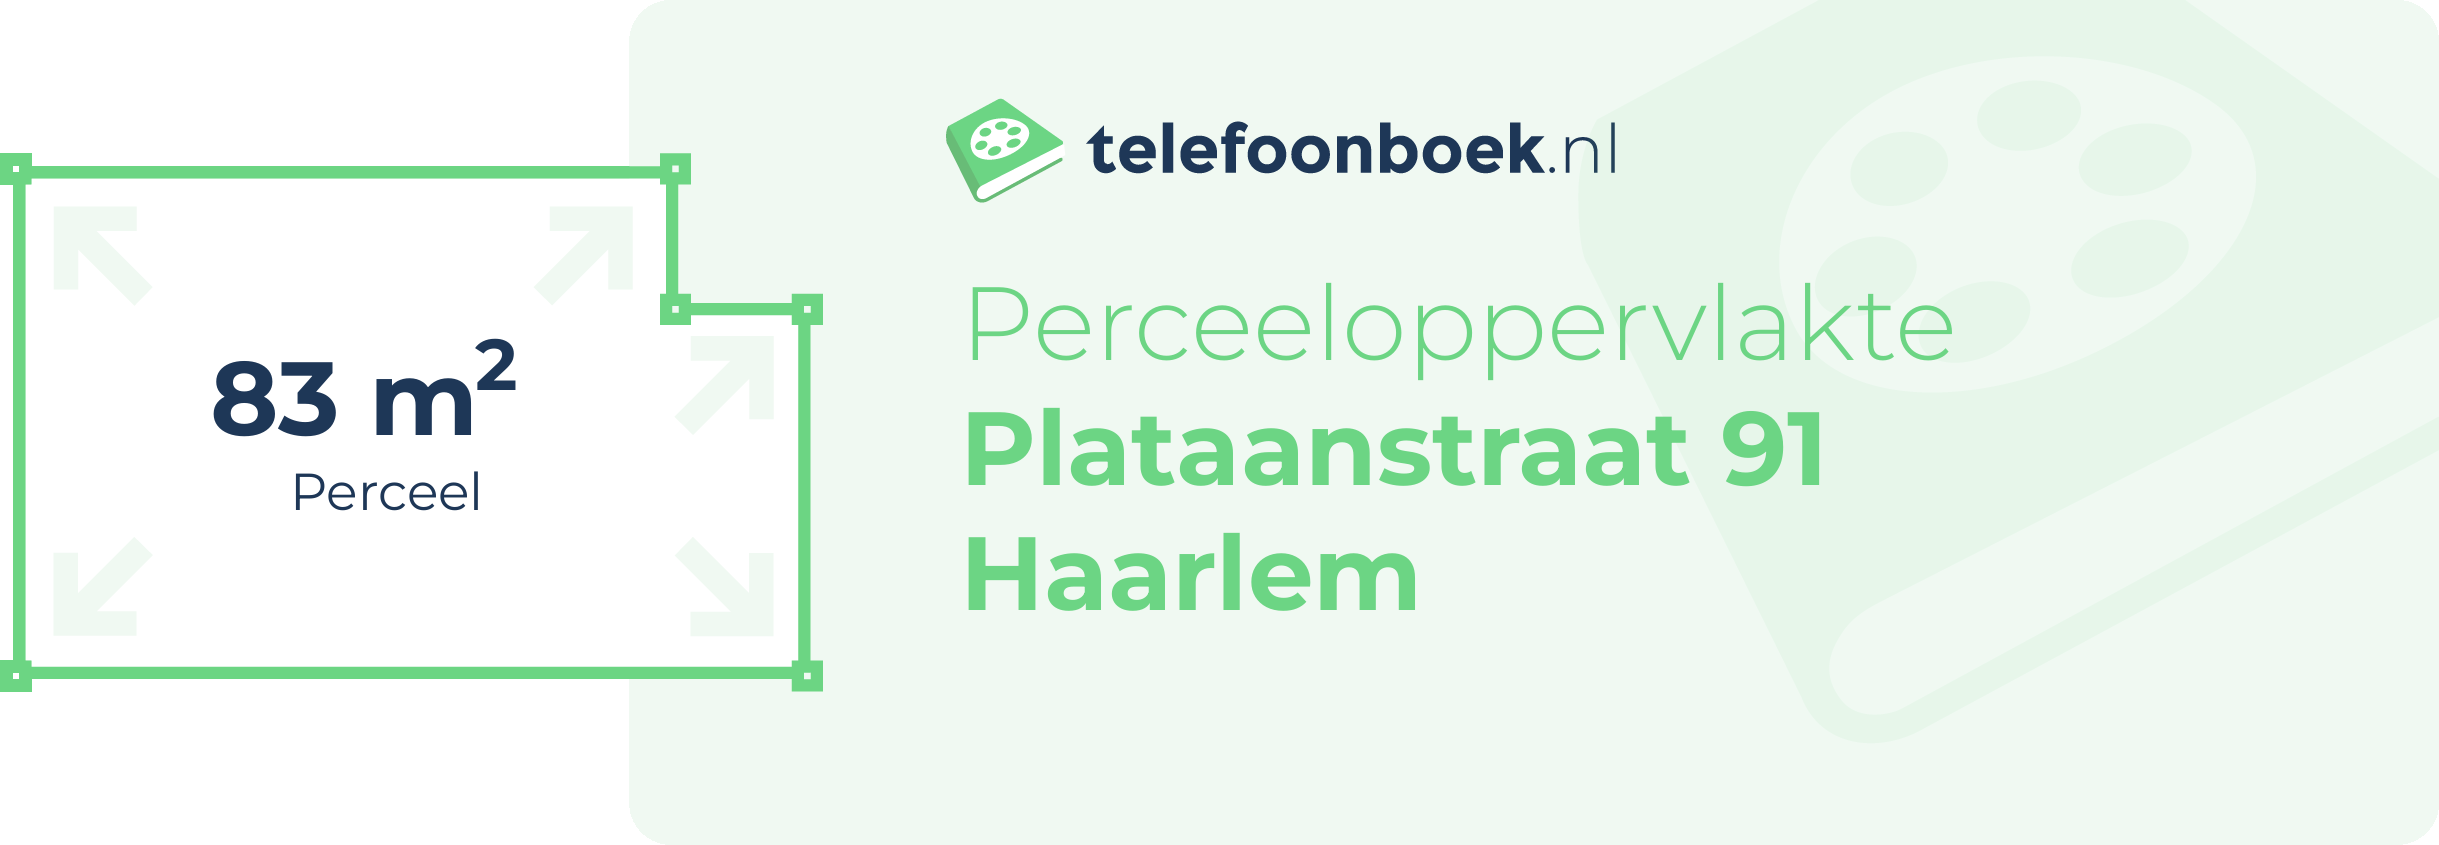 Perceeloppervlakte Plataanstraat 91 Haarlem